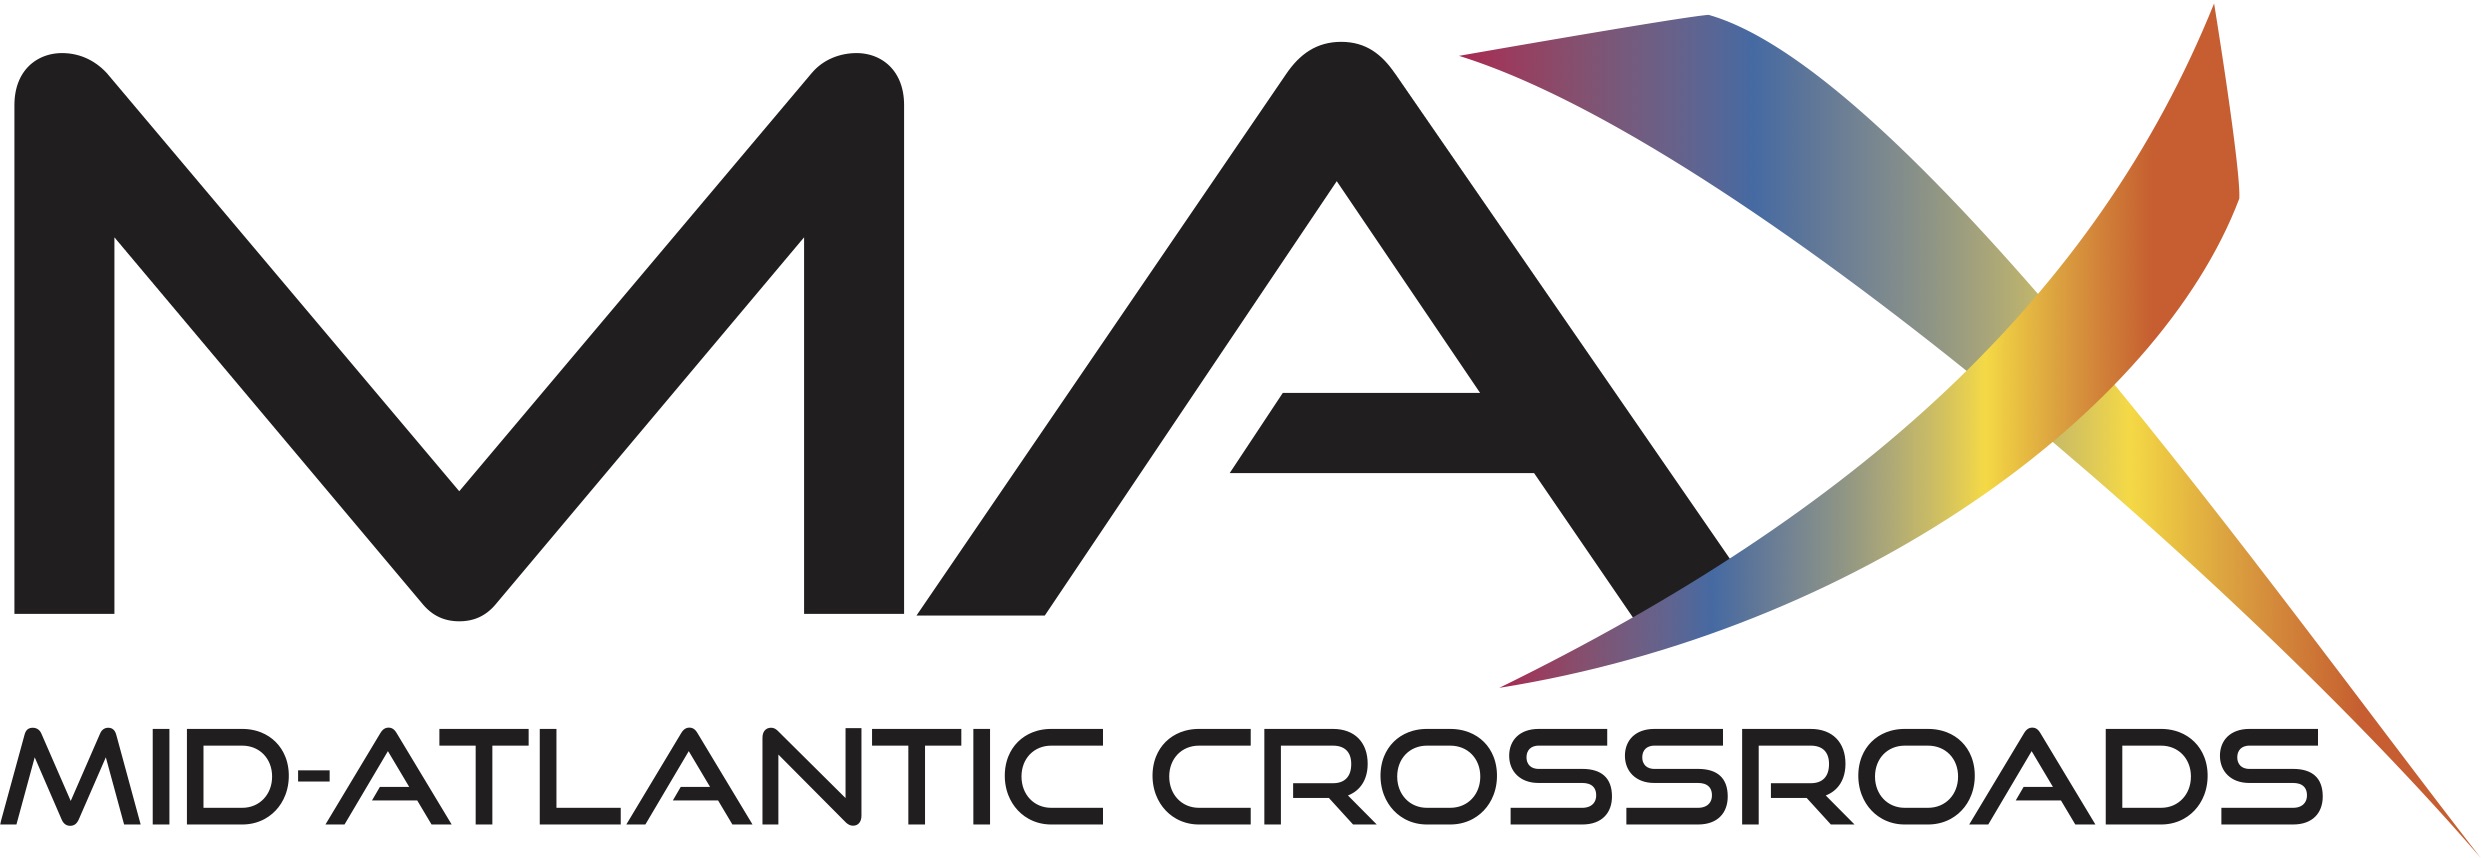 Mid-Atlantic Crossroads (MAX) logo